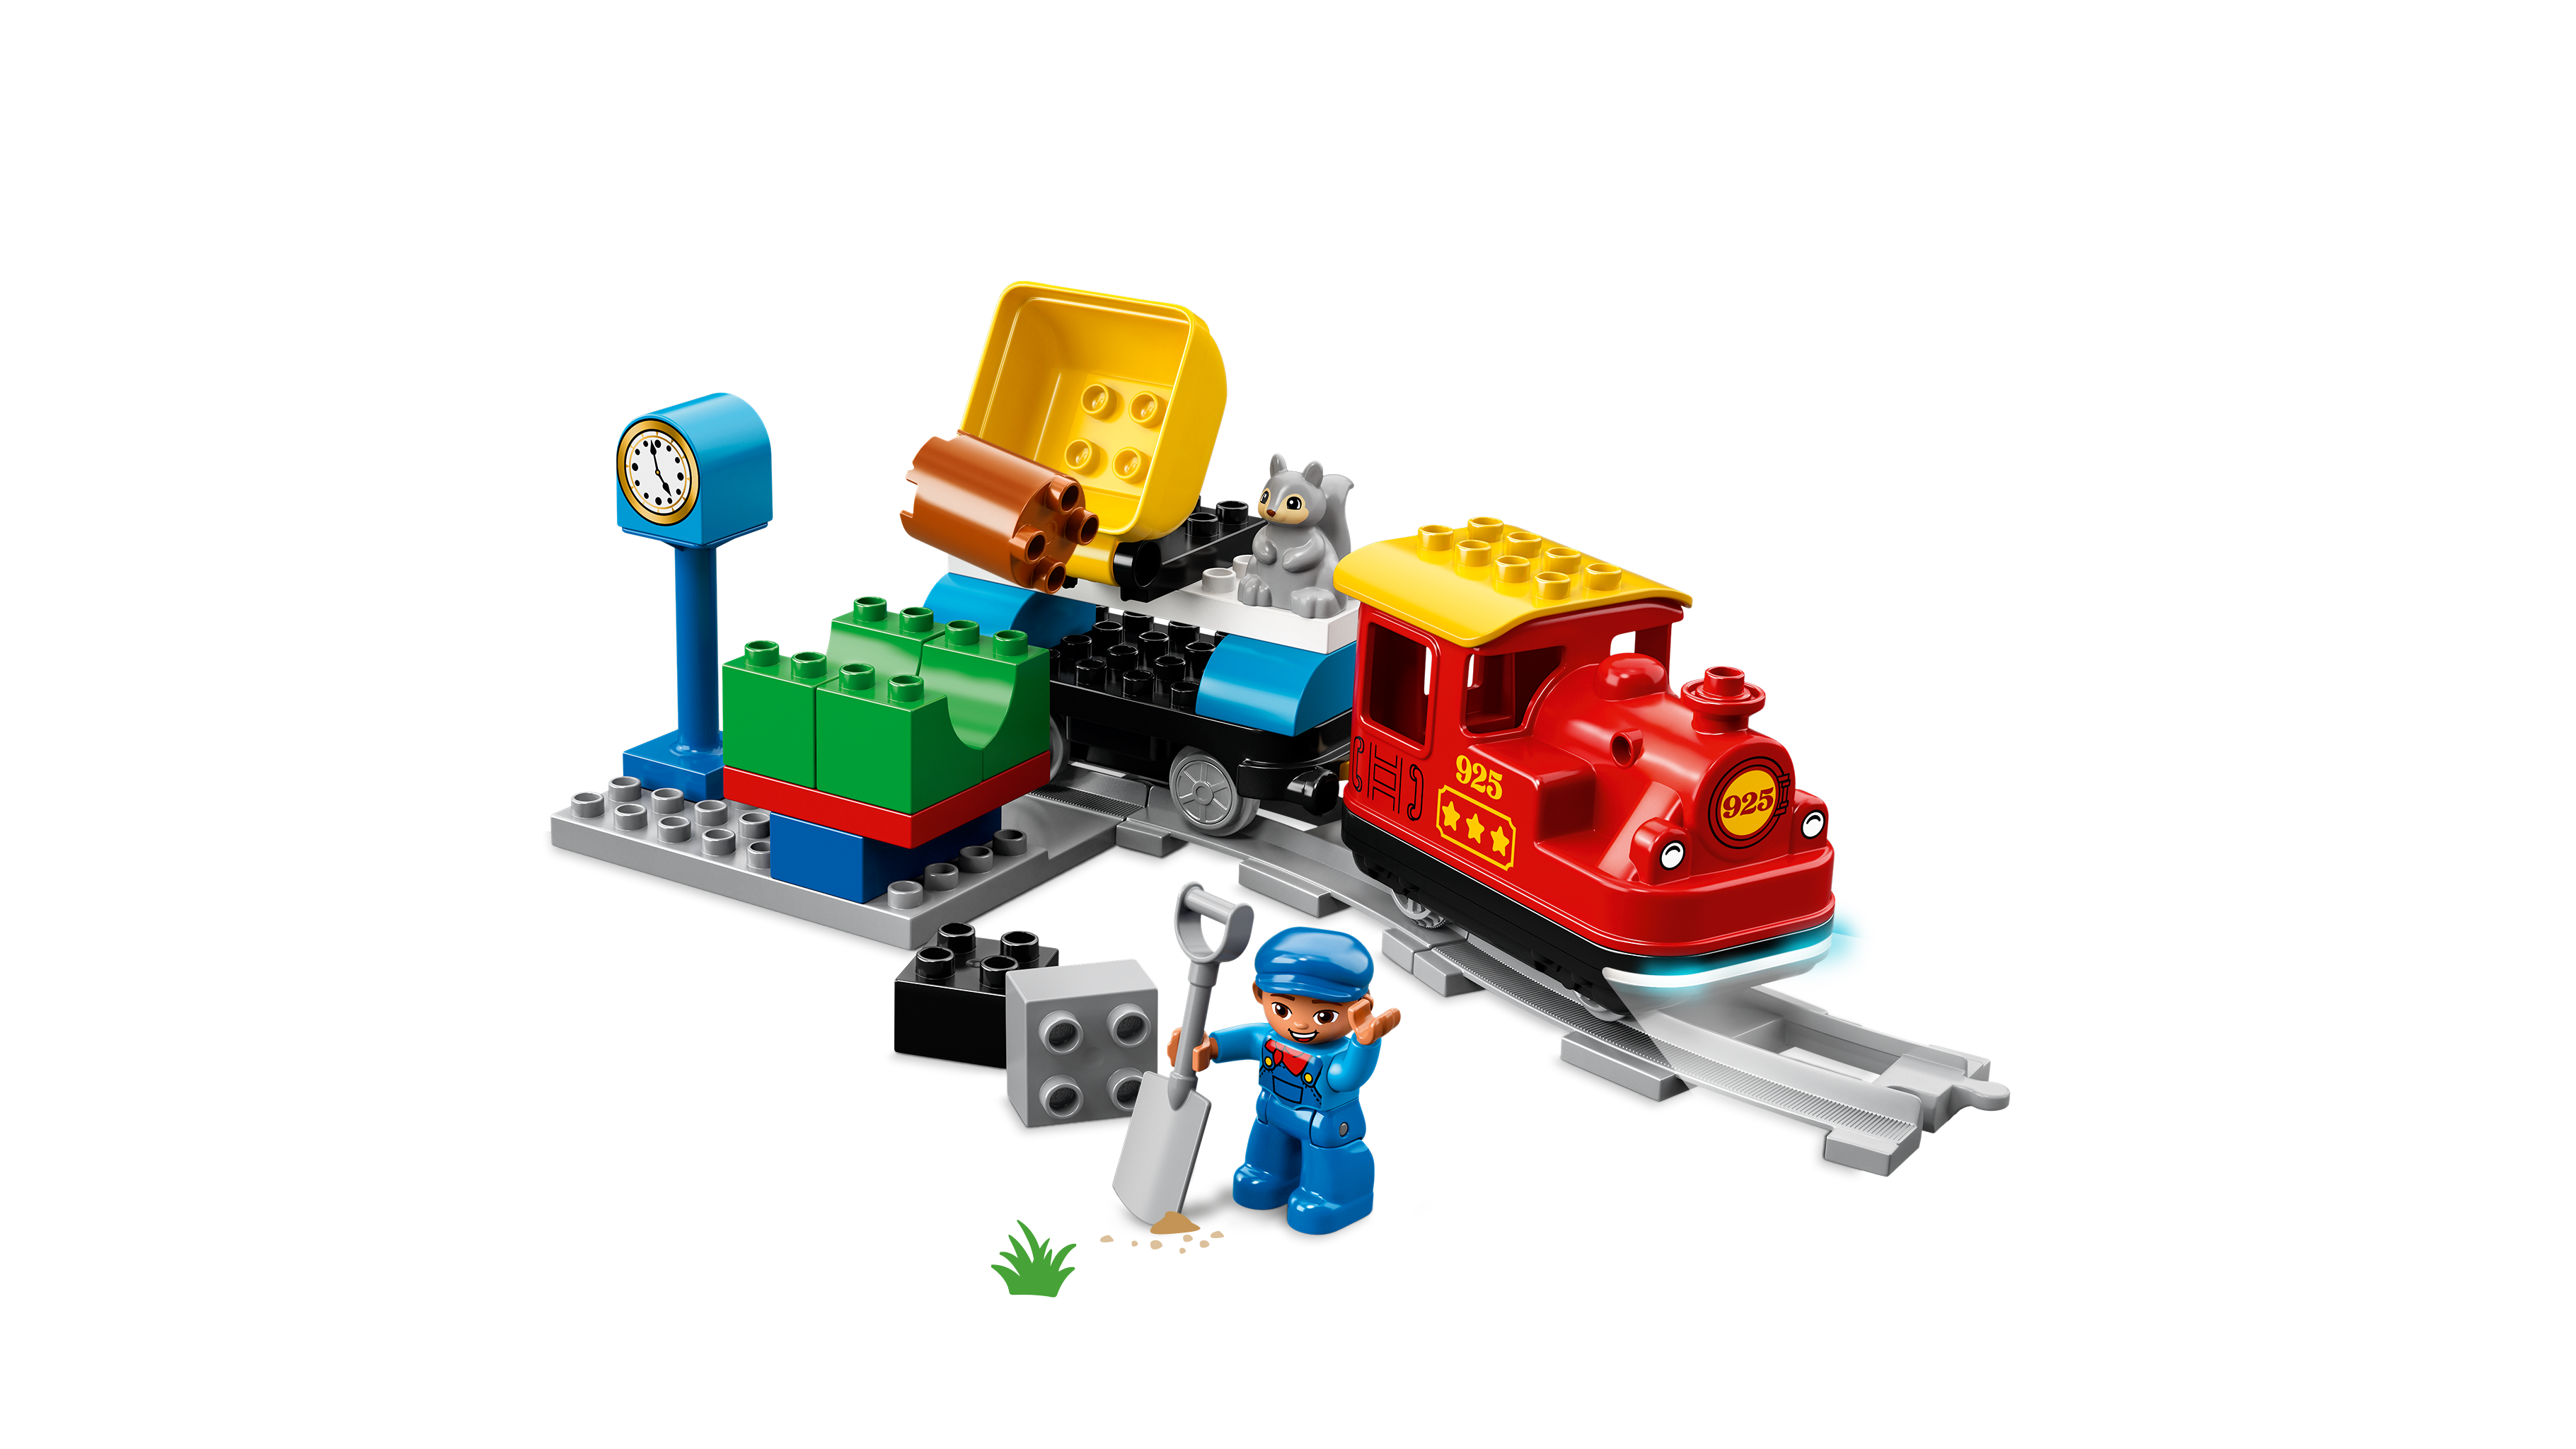 10874 Bausatz, Dampfeisenbahn LEGO Mehrfarbig